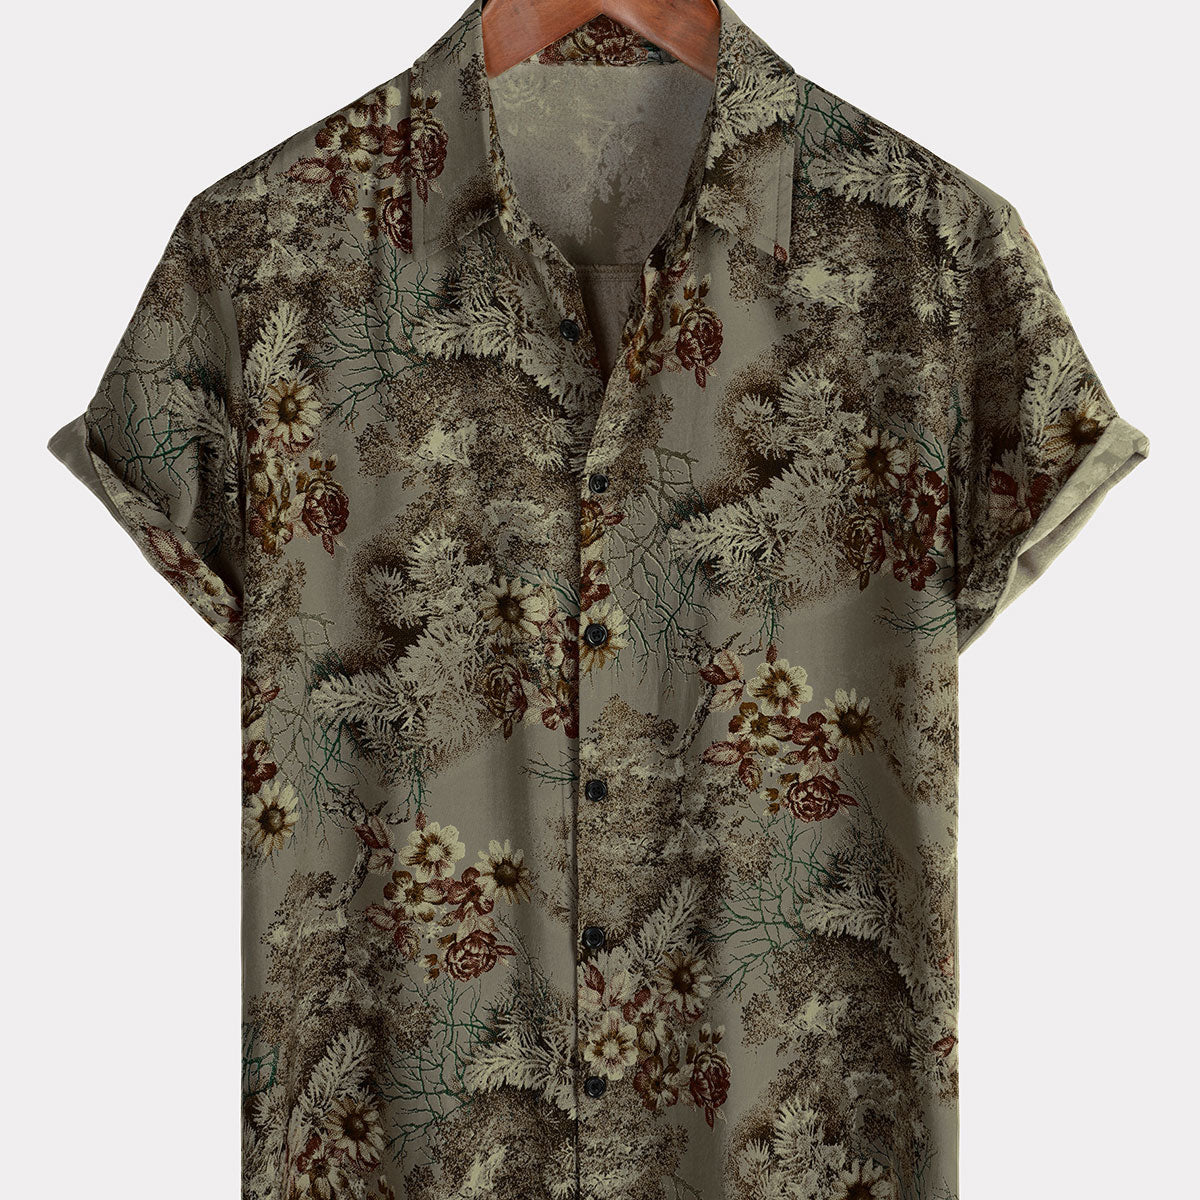 Men's Retro Floral Casual Vintage Summer Holiday Short Sleeve Shirt